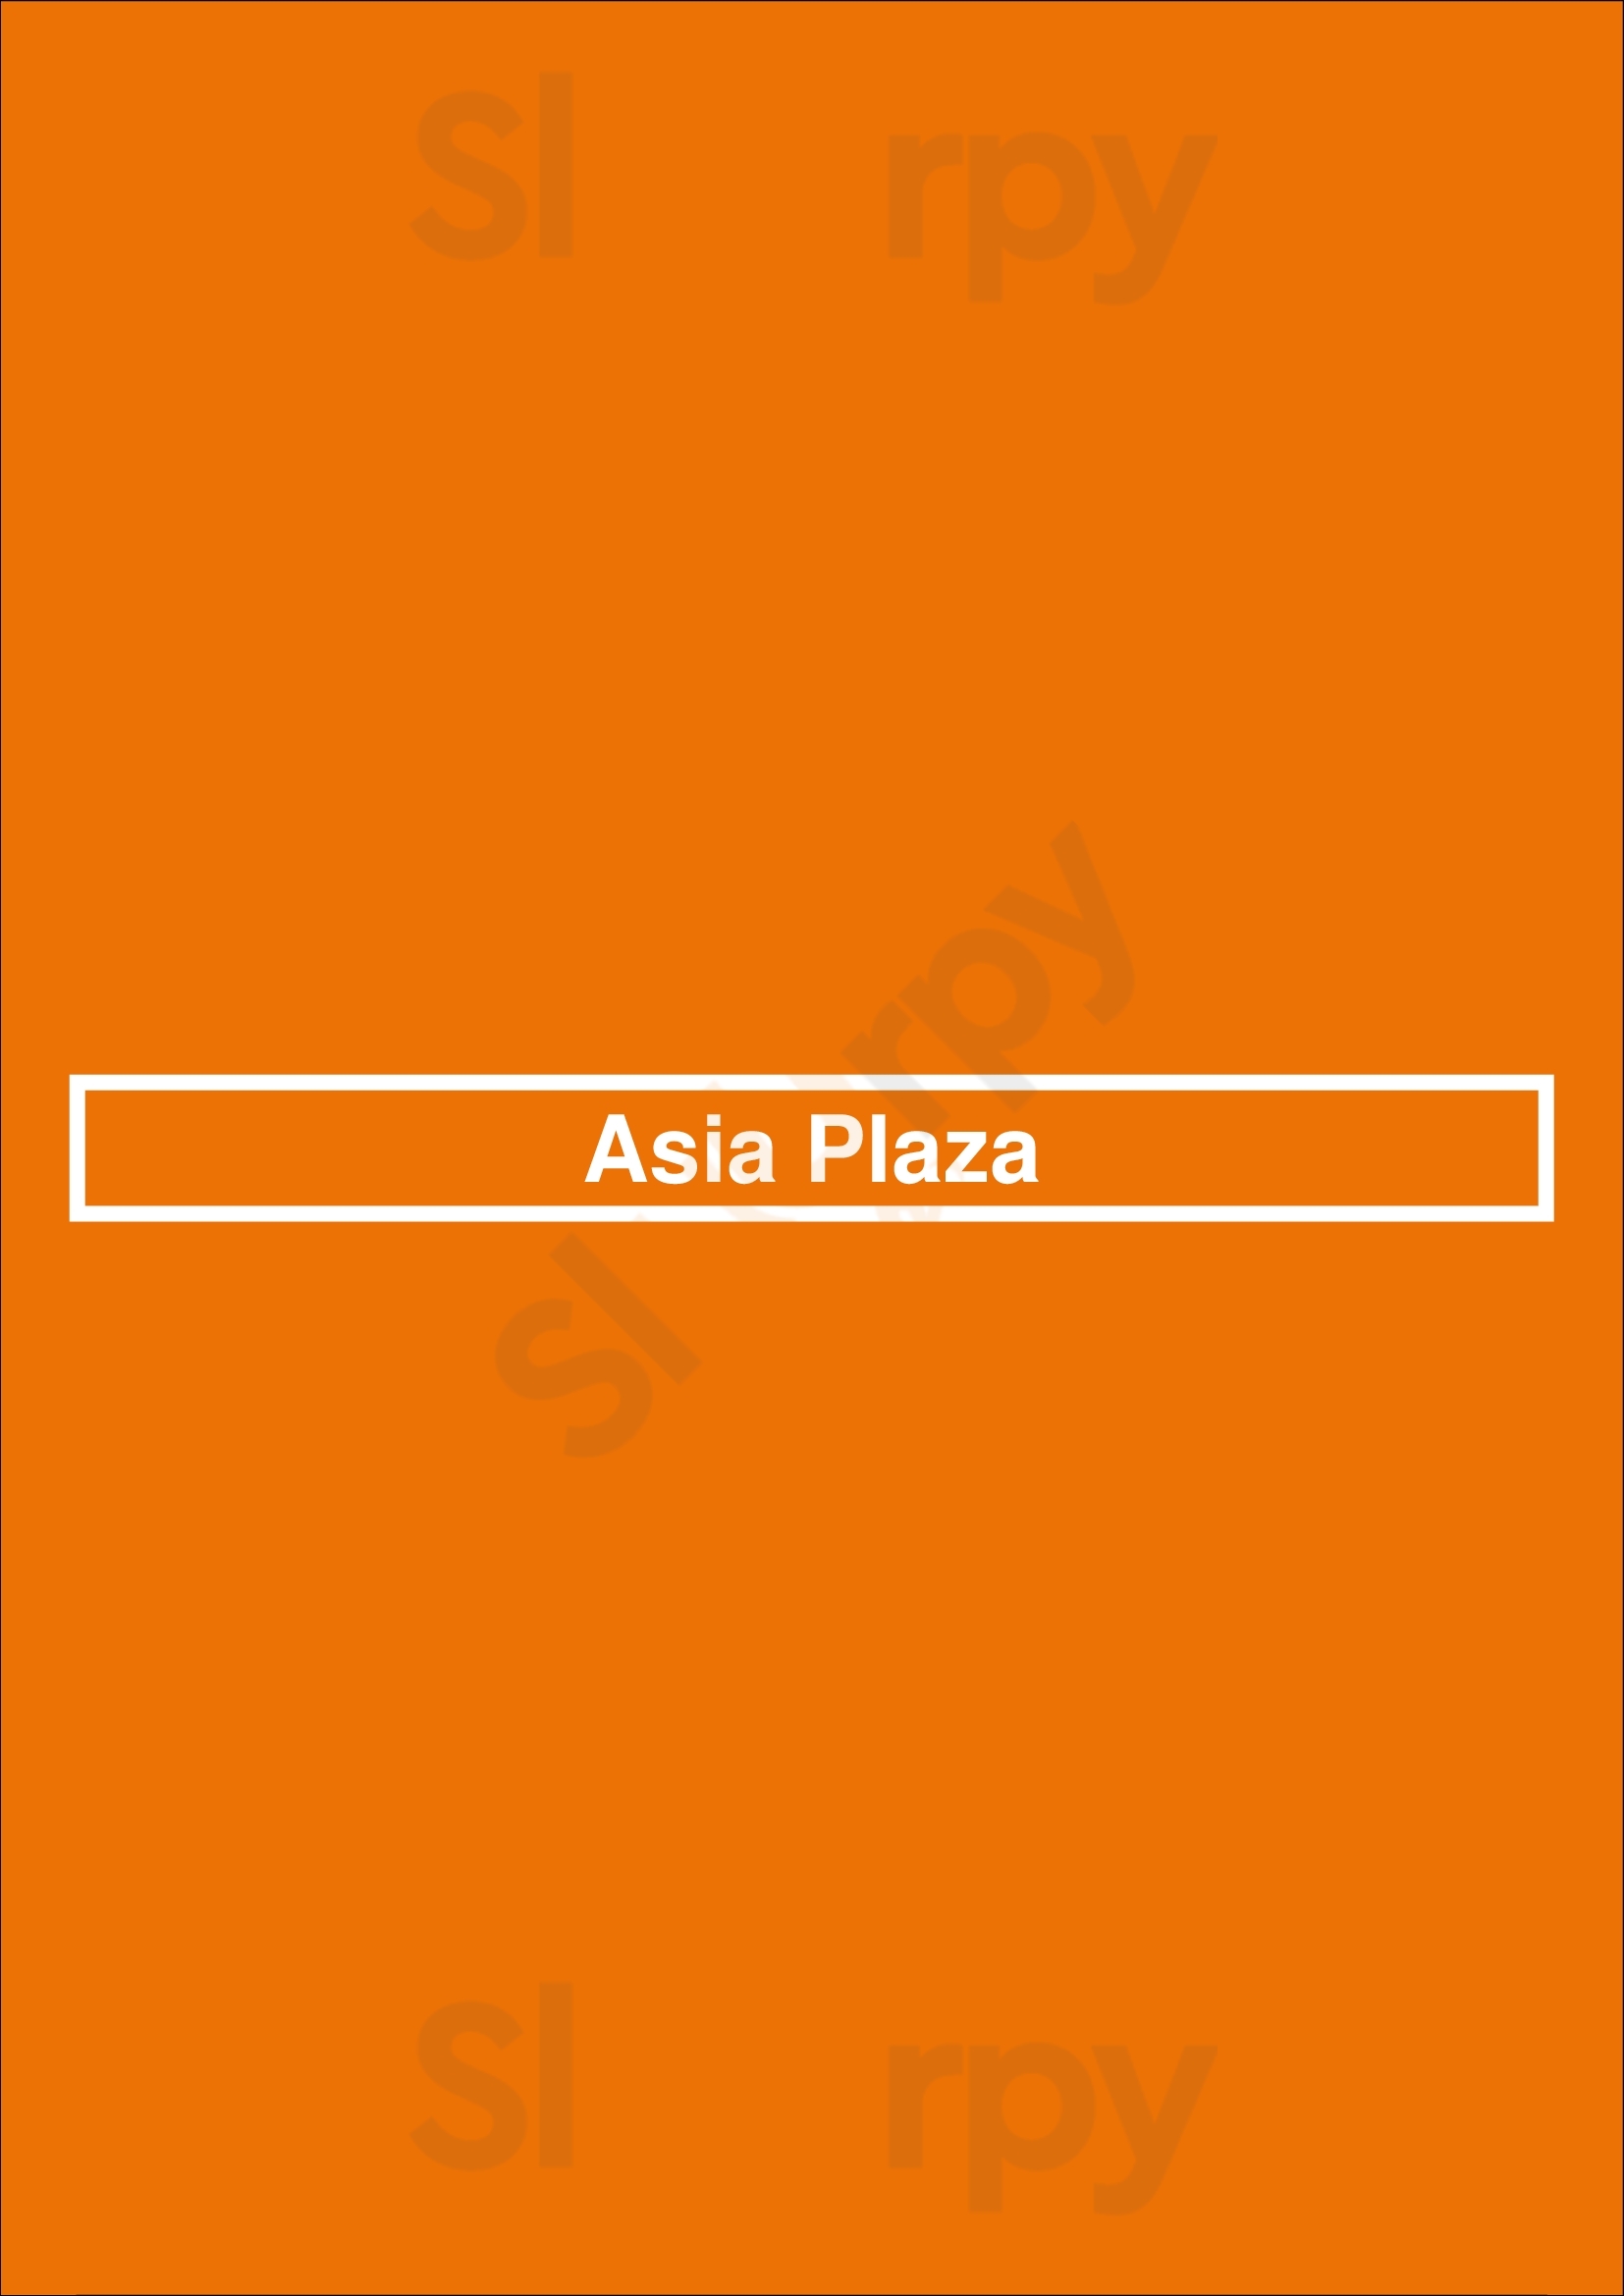 Asia Plaza Wageningen Menu - 1